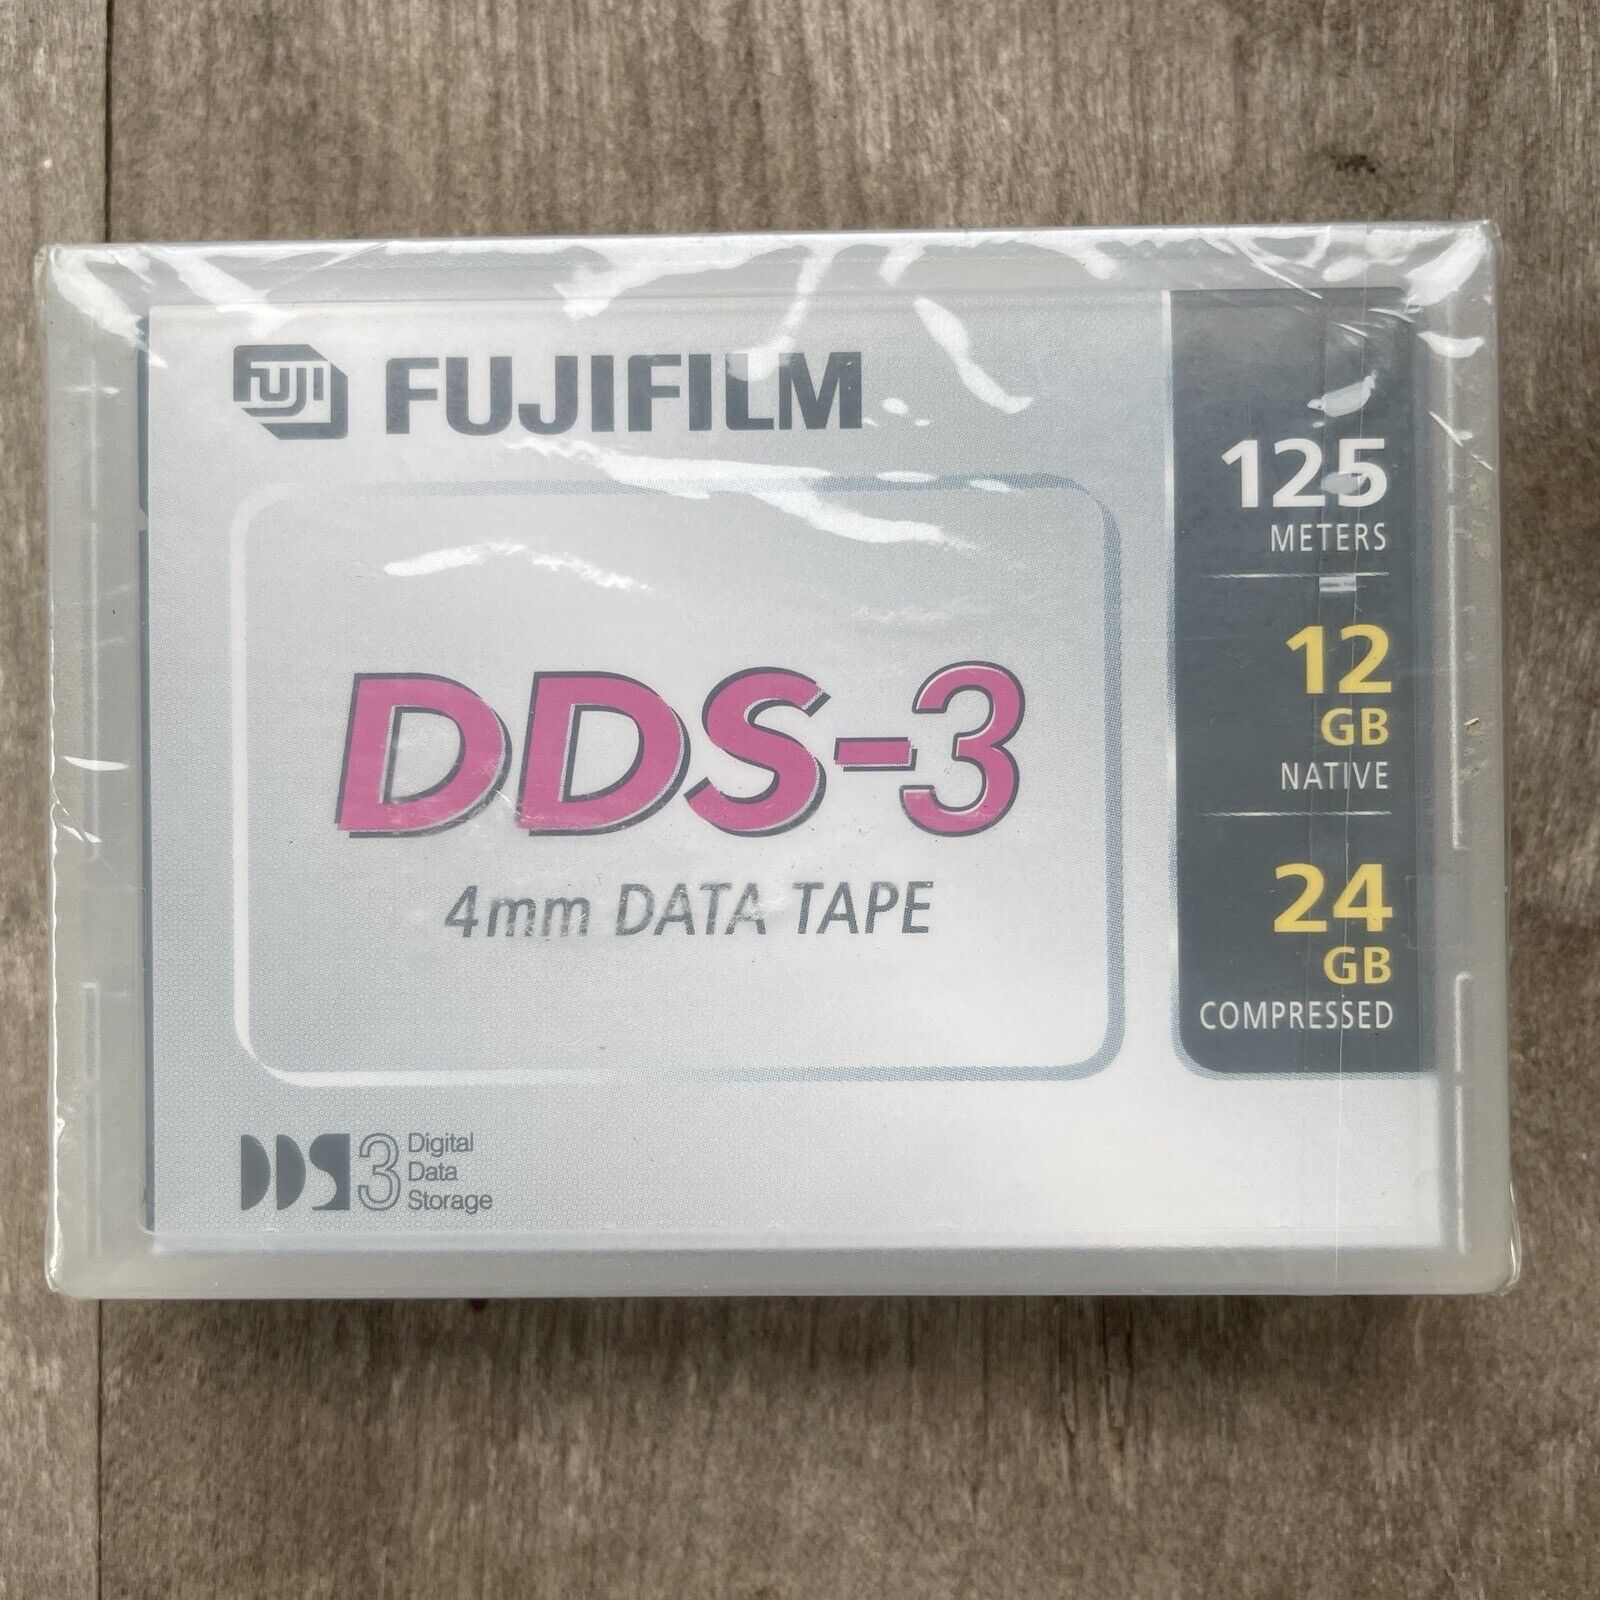 FujiFilm DDS3 12/24 GB 4mm Data Tape Cartridge Sealed